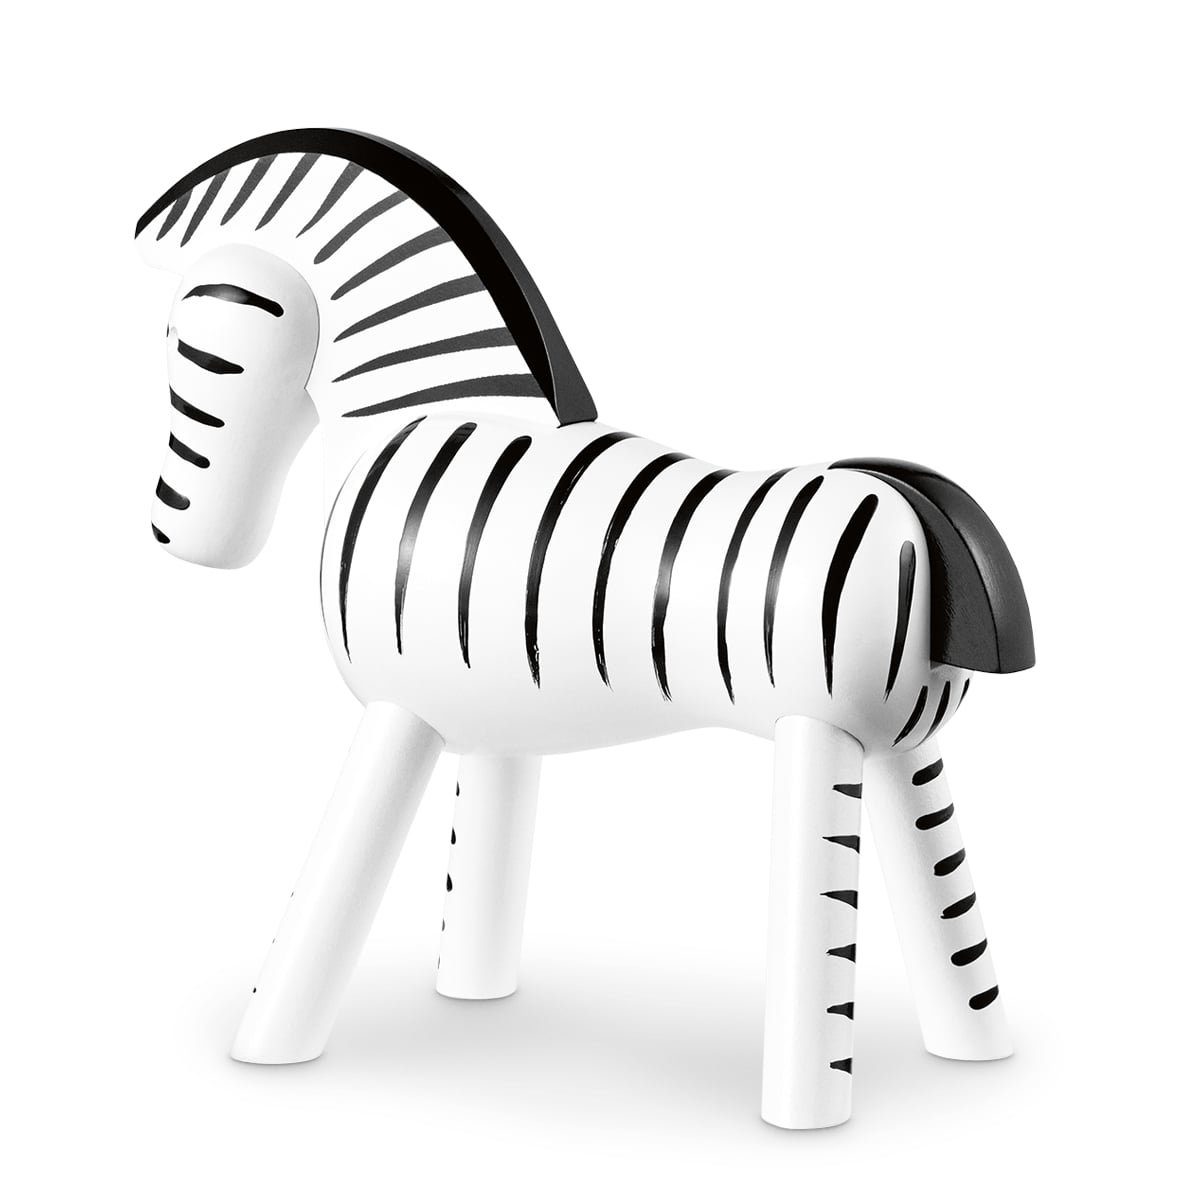 KAY BOJESEN Denmark Dekofigur Zebra